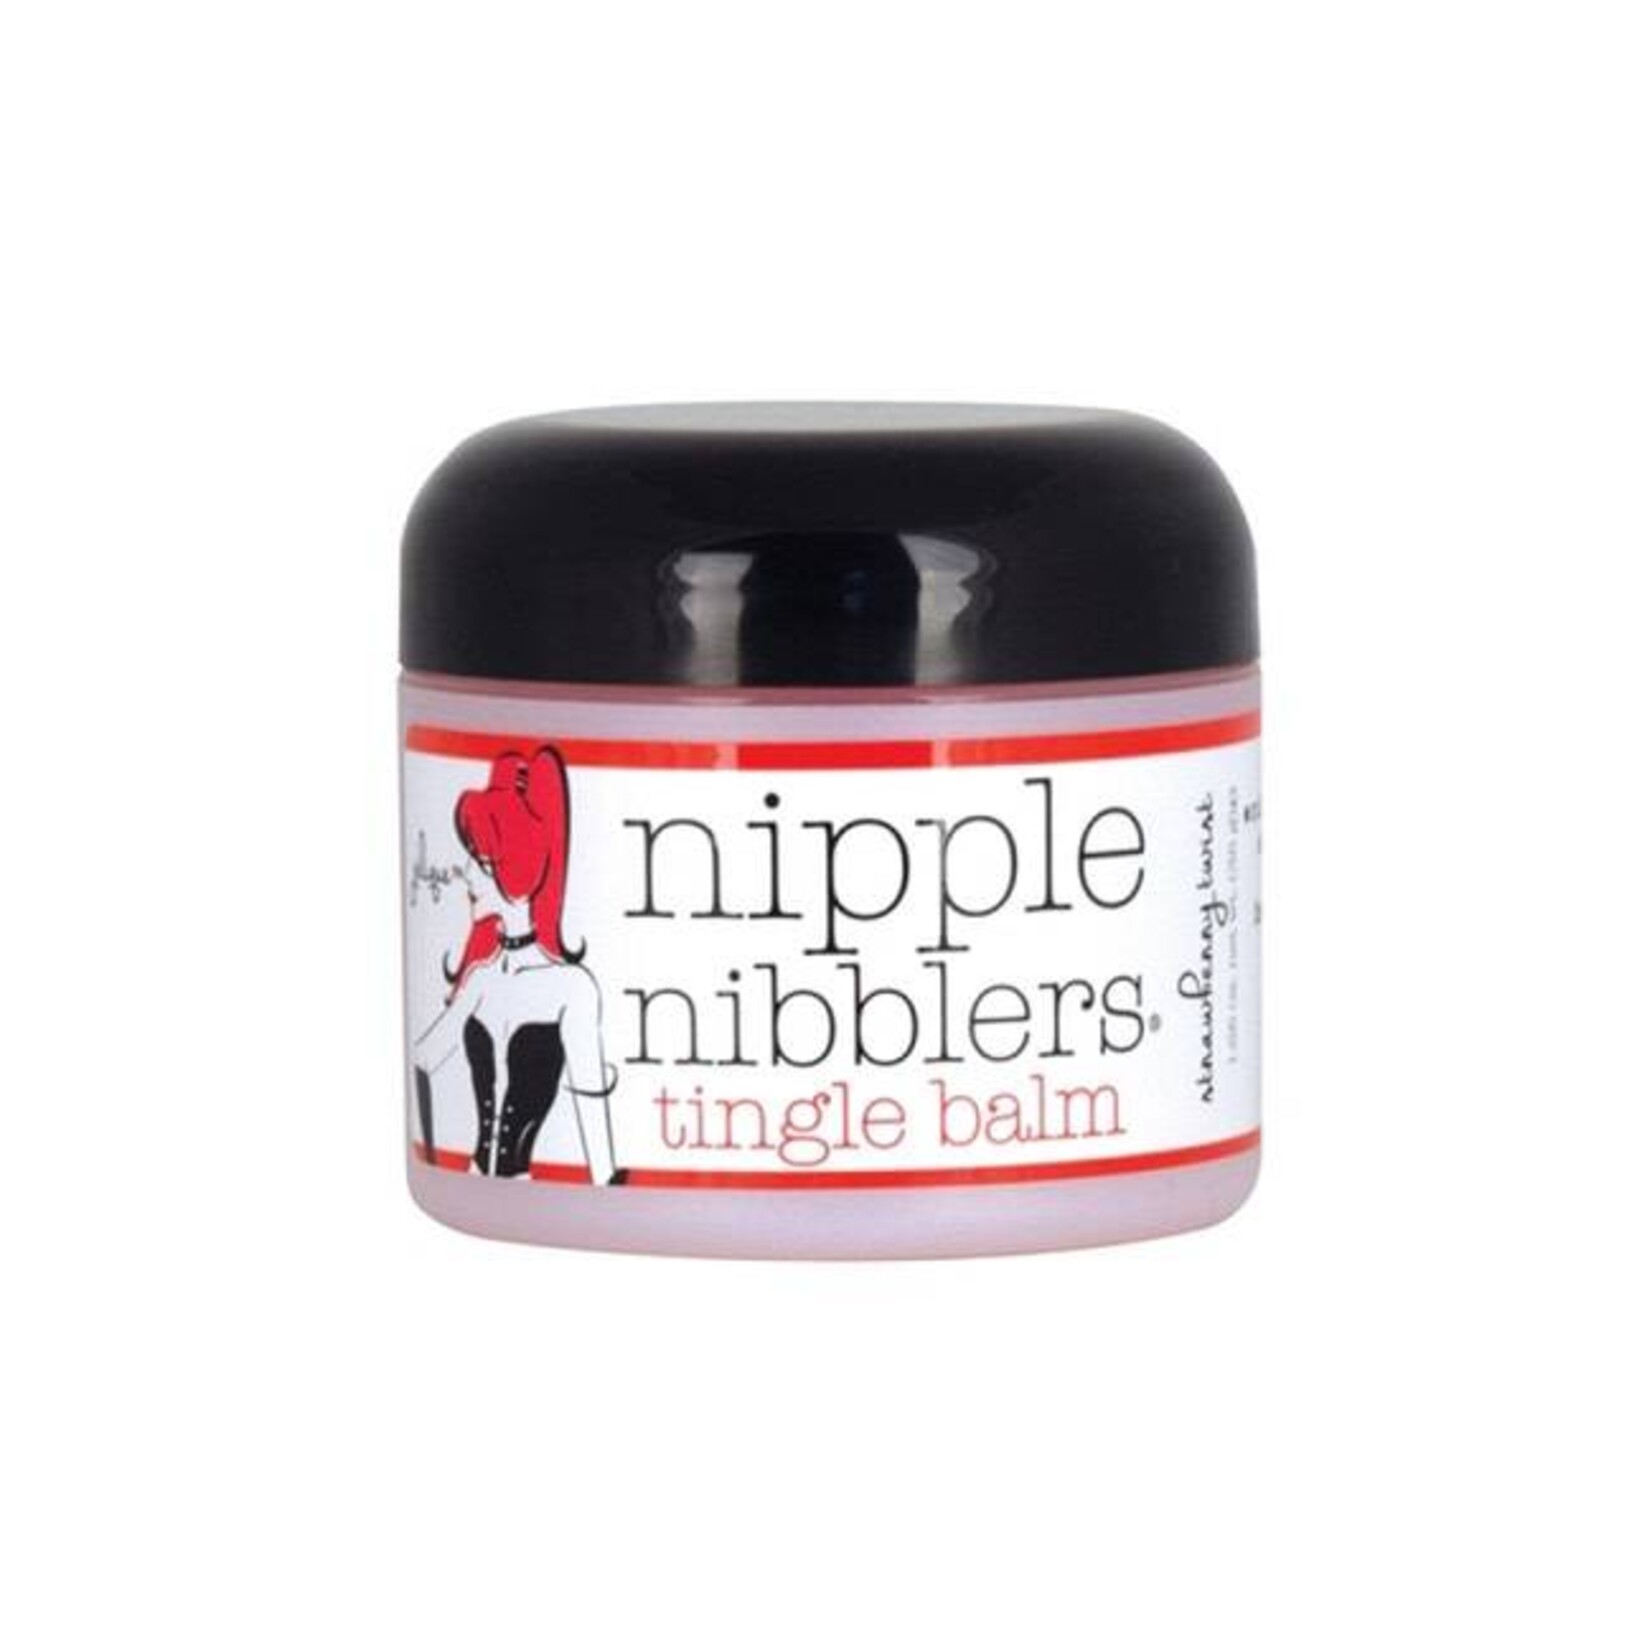 Nipple Nibblers Tingle Balm Jar 1.25oz